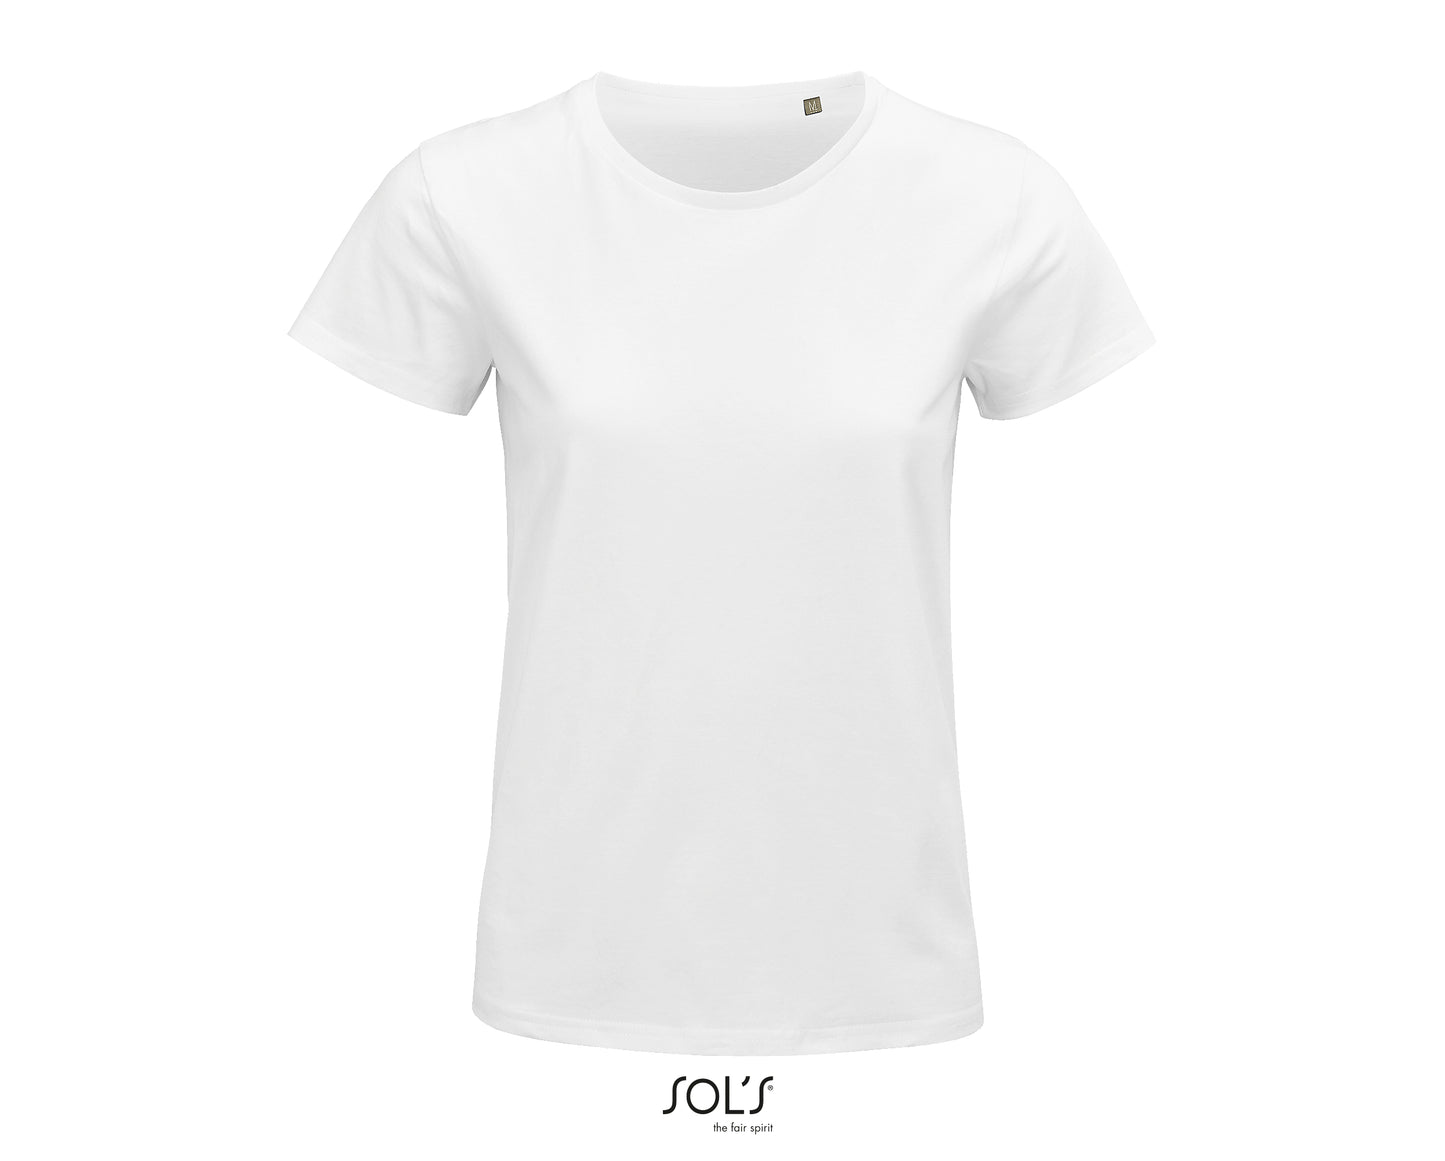 PIONEER femme - t-shirt coton bio